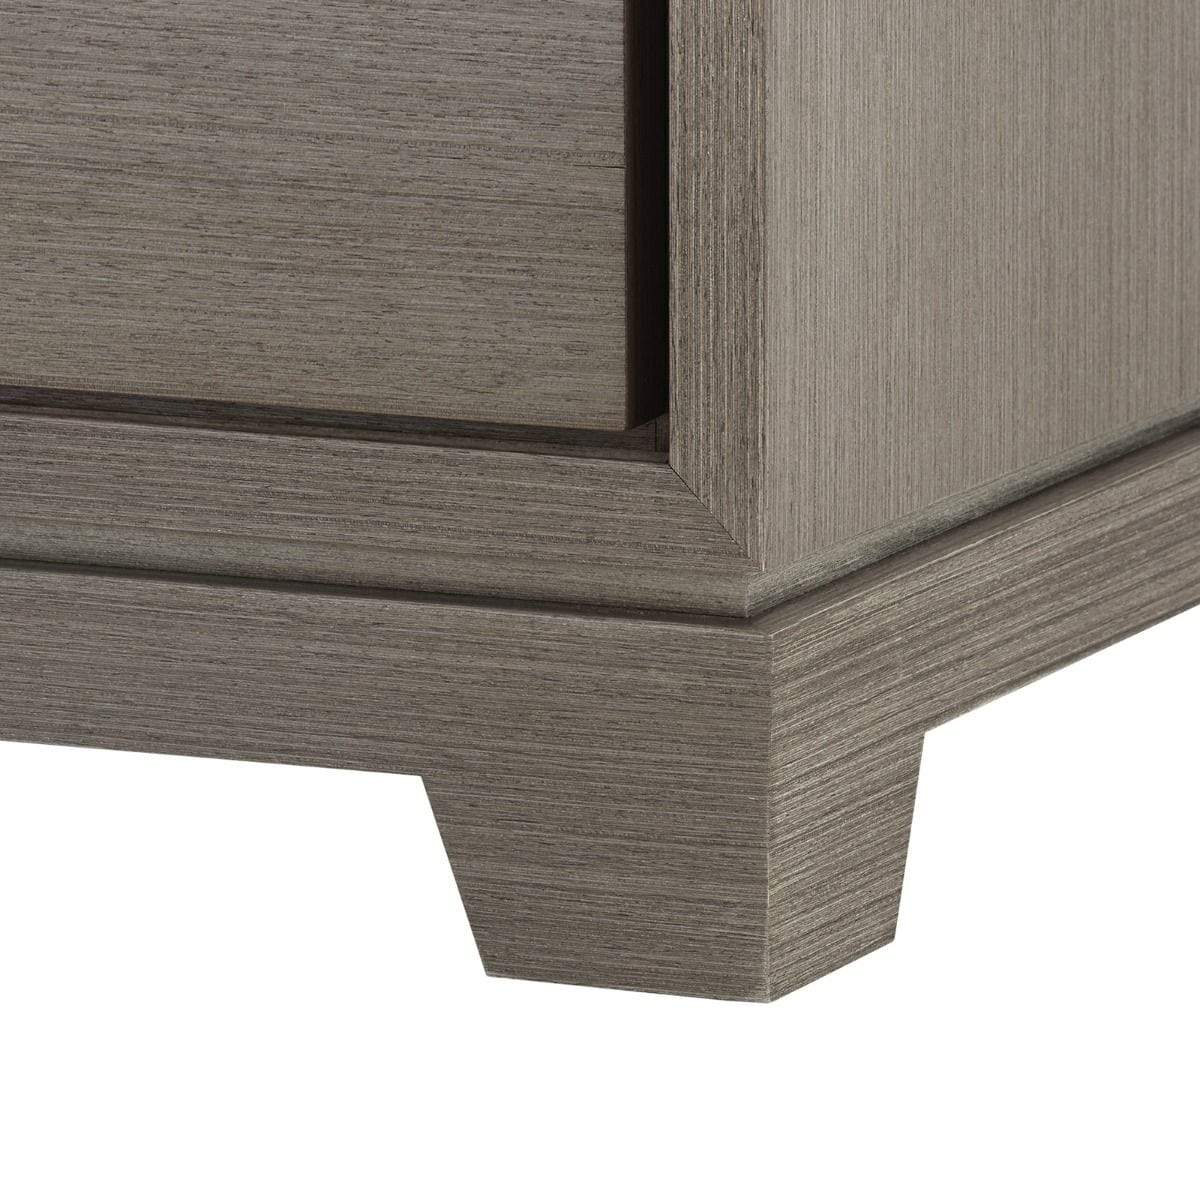 Villa & House Stanford Extra Large 6-Drawer Dresser - Taupe Gray Furniture